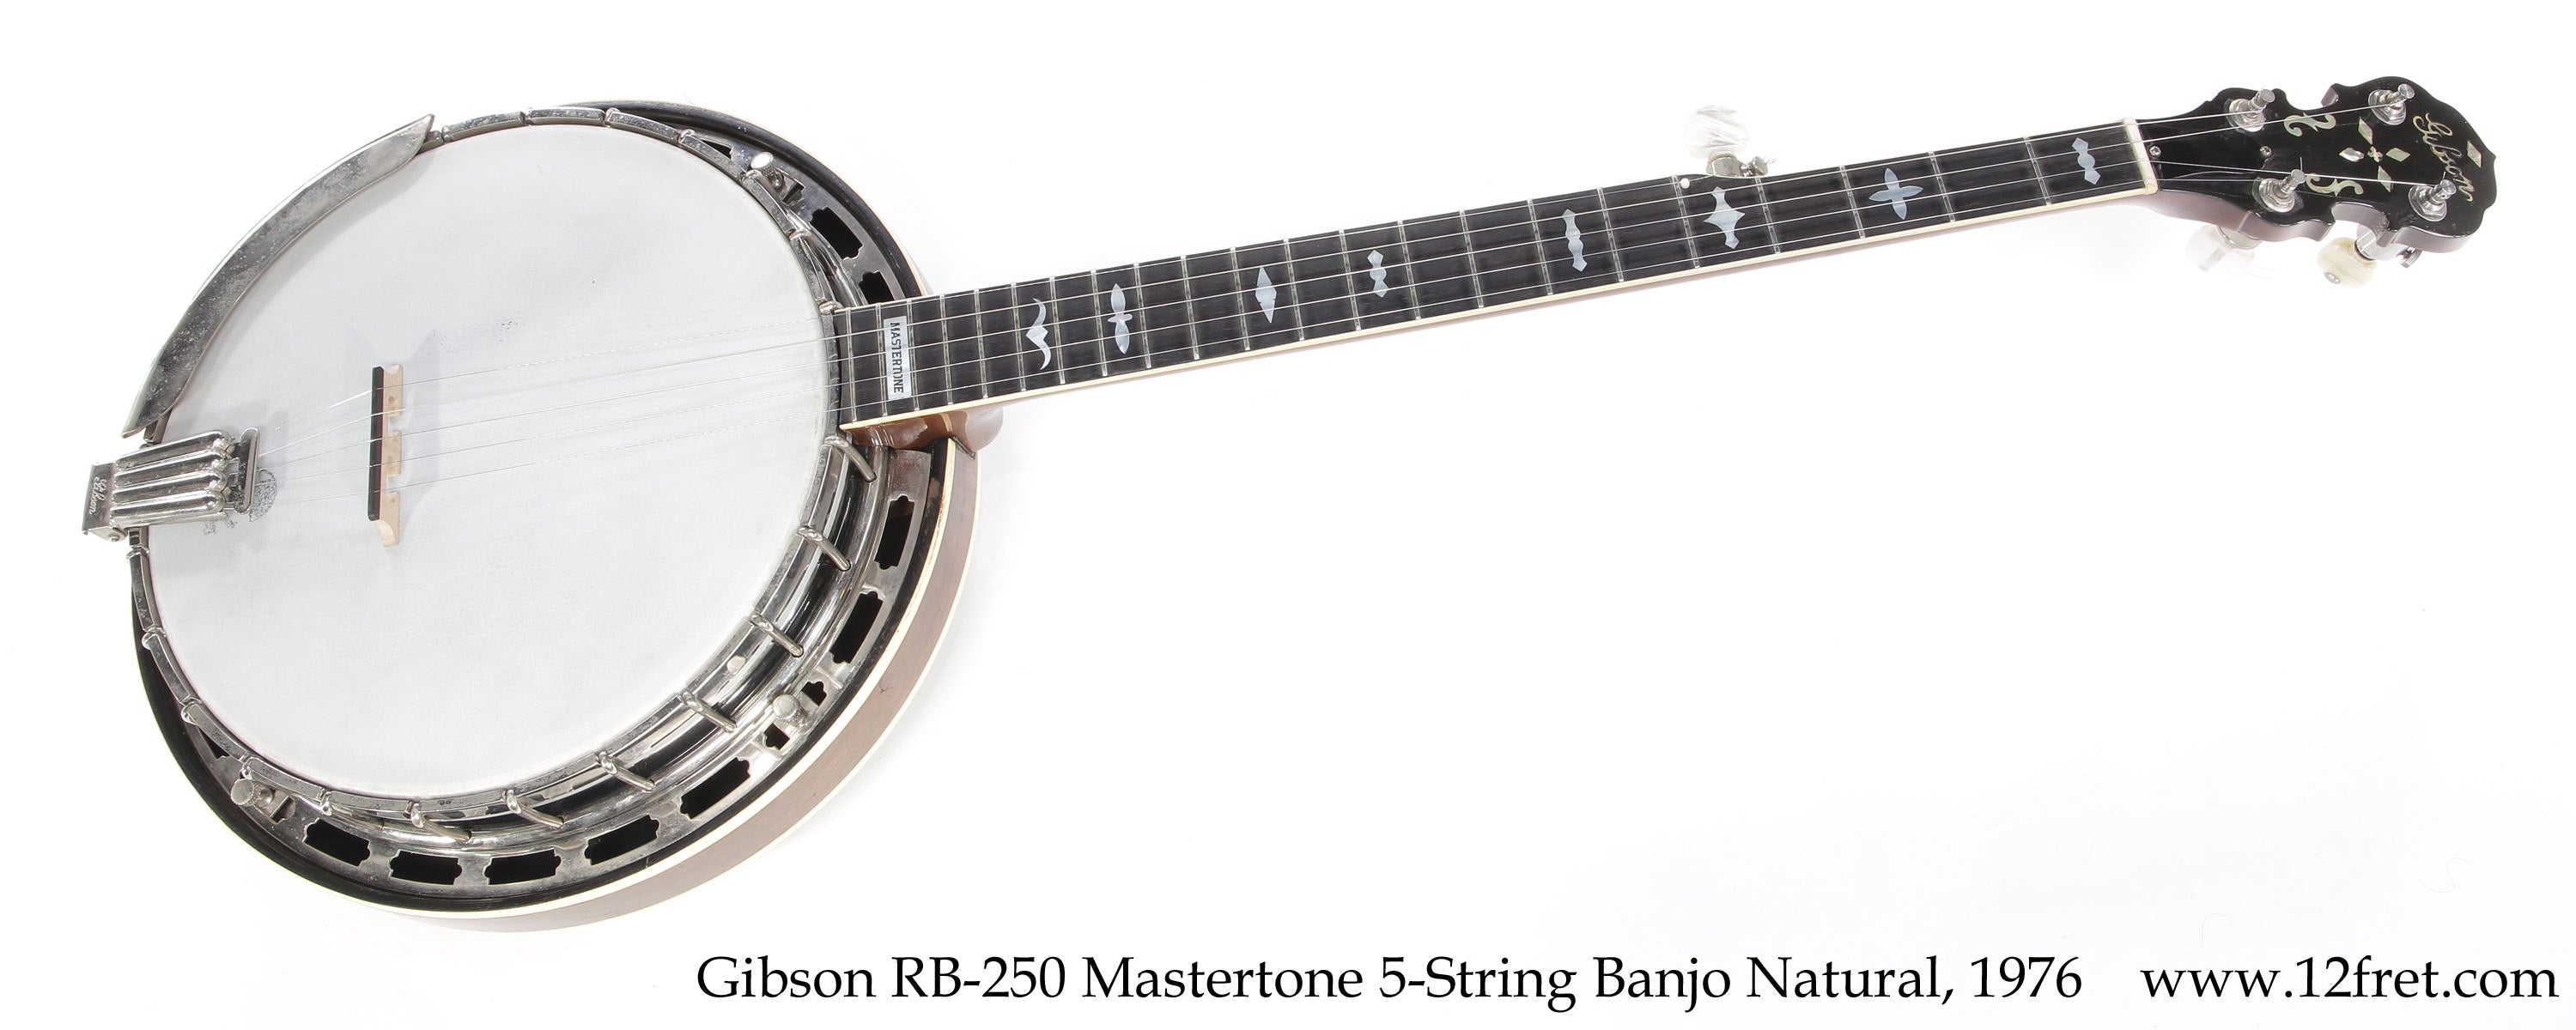 Gibson RB-250 5-String Banjo Natural, 1976  - The Twelfth Fret